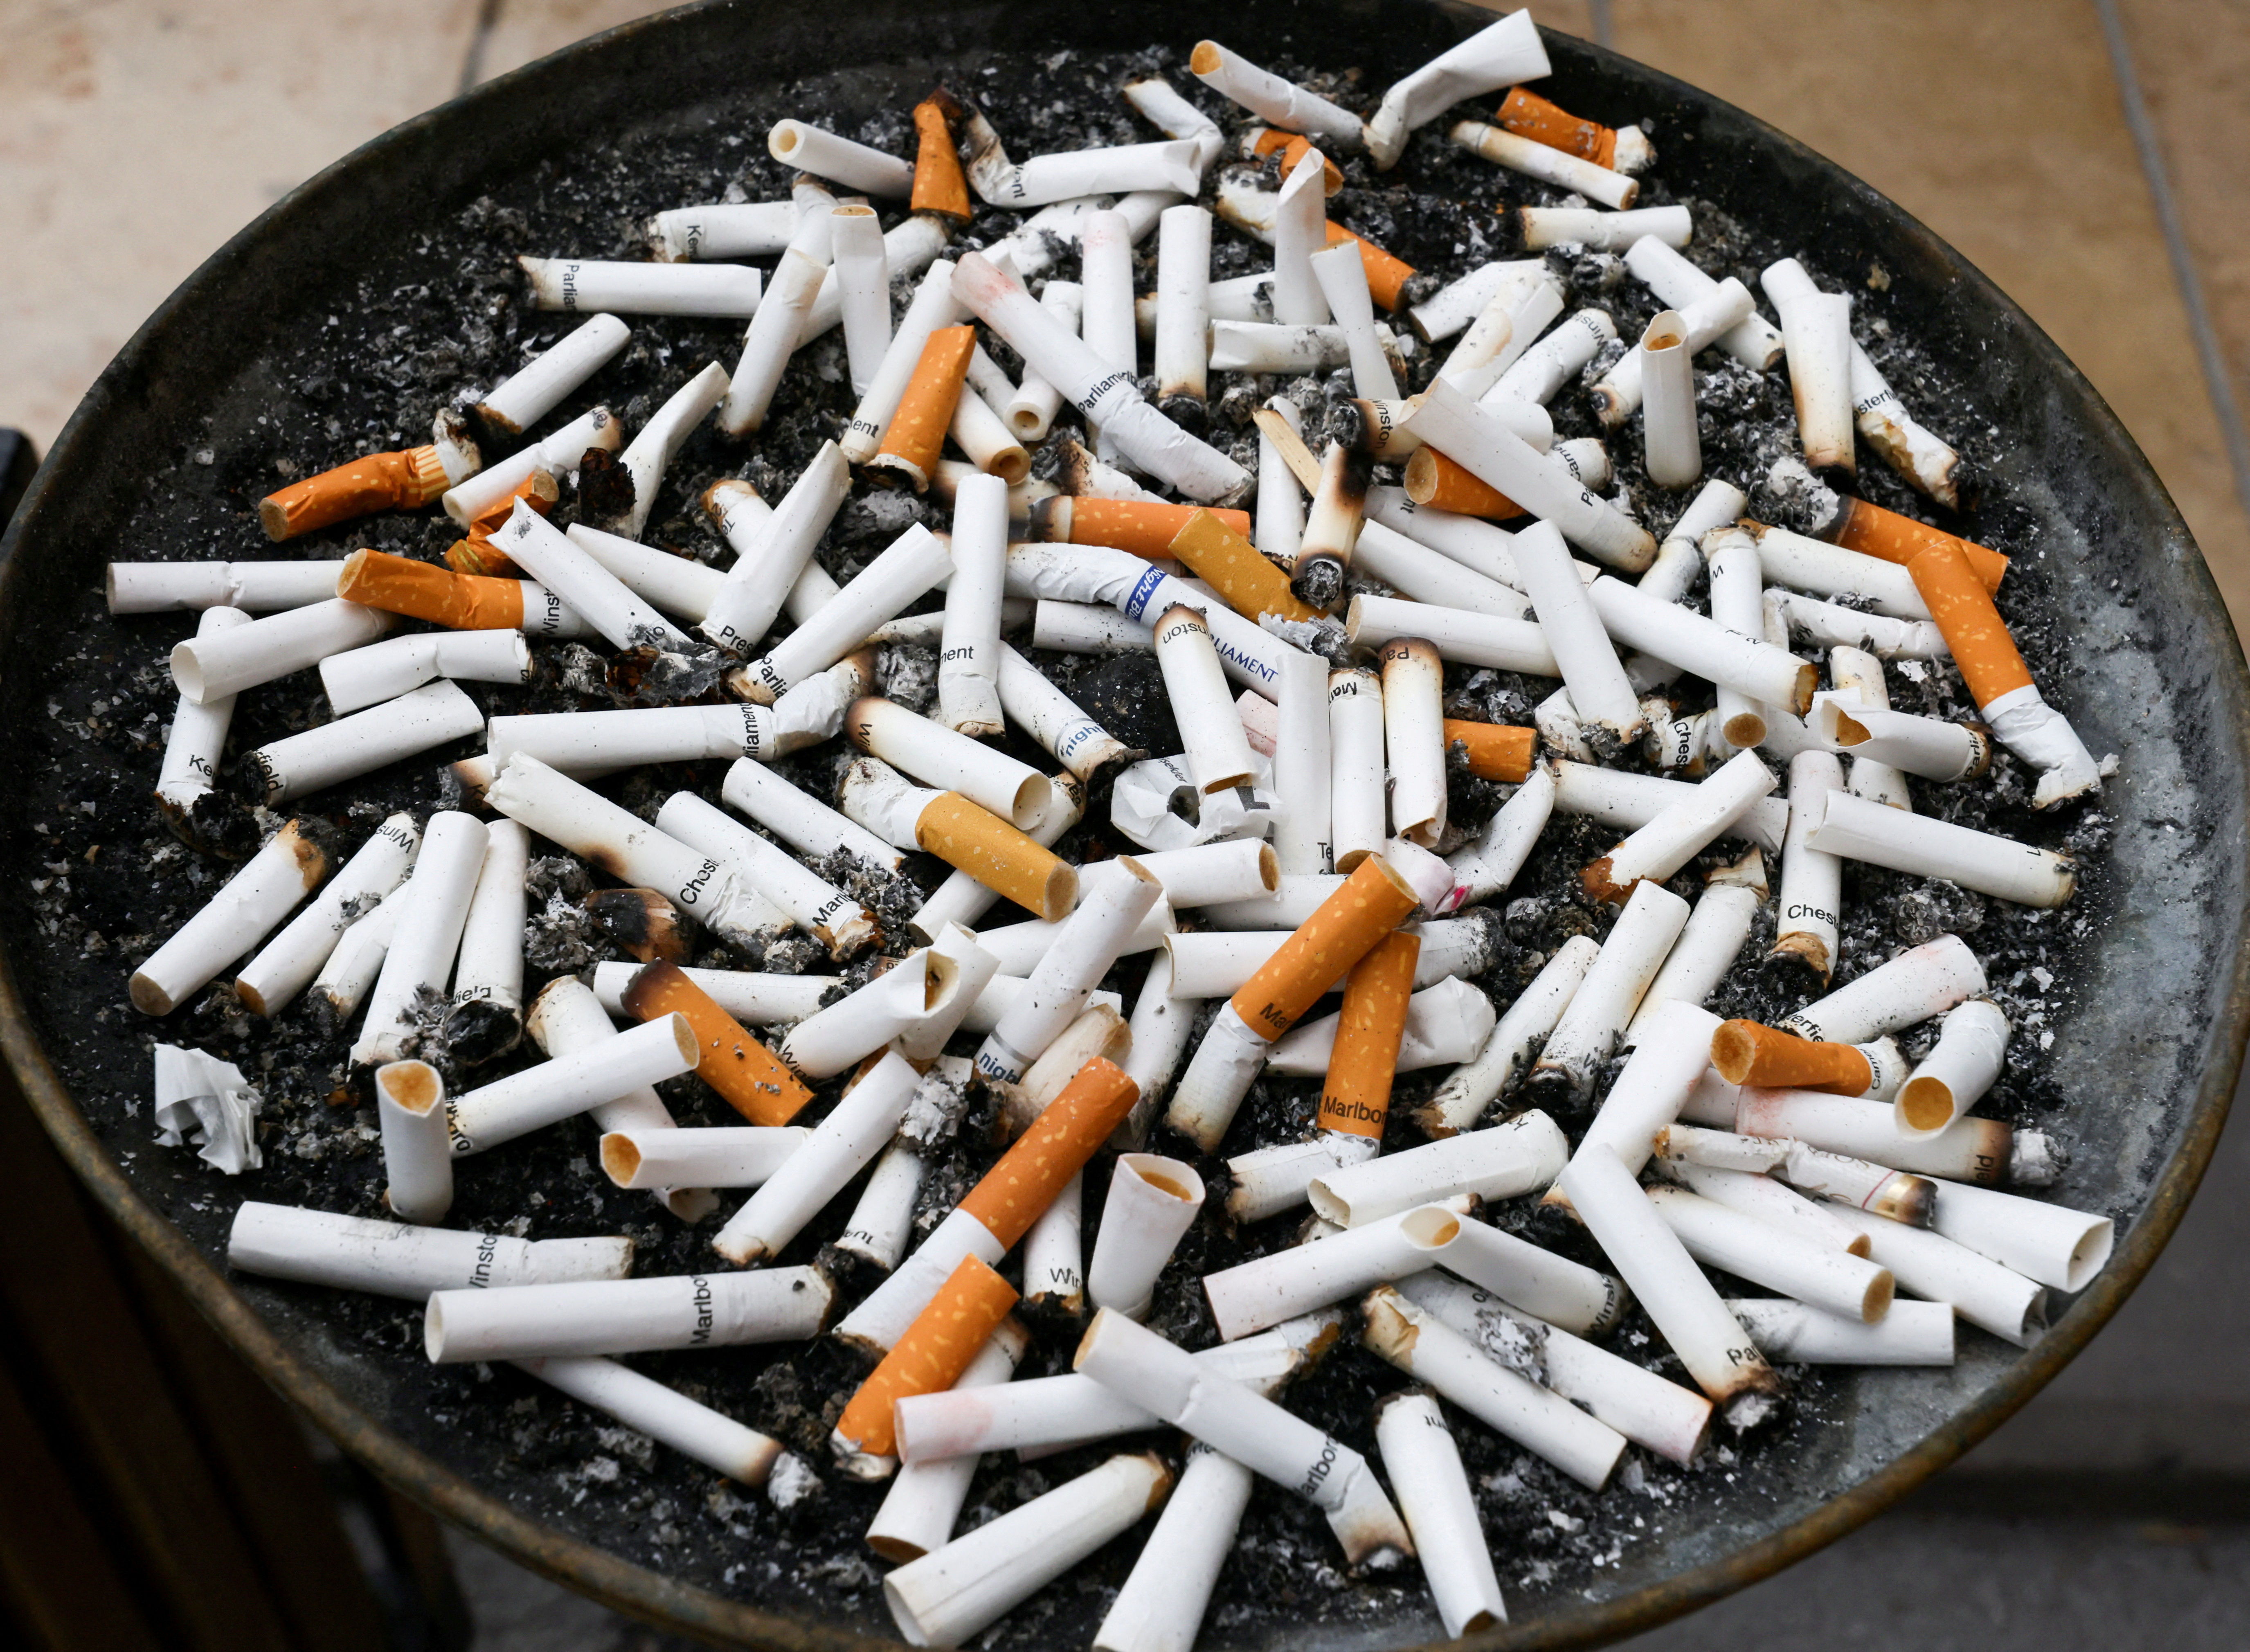 COVID-19 slowed global progress in tobacco control - report